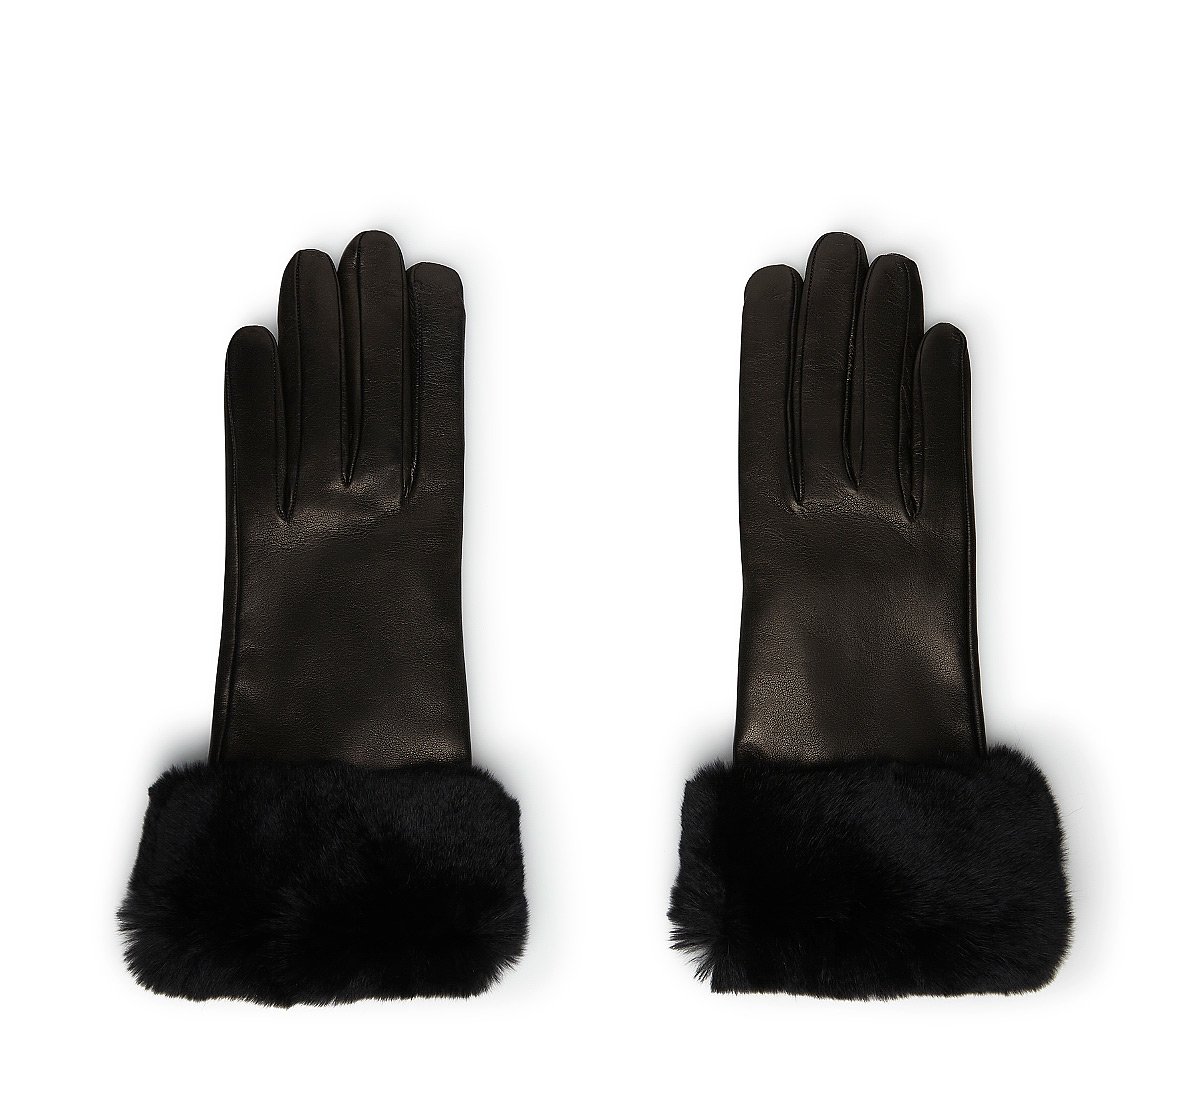 Black gloves with fur trim